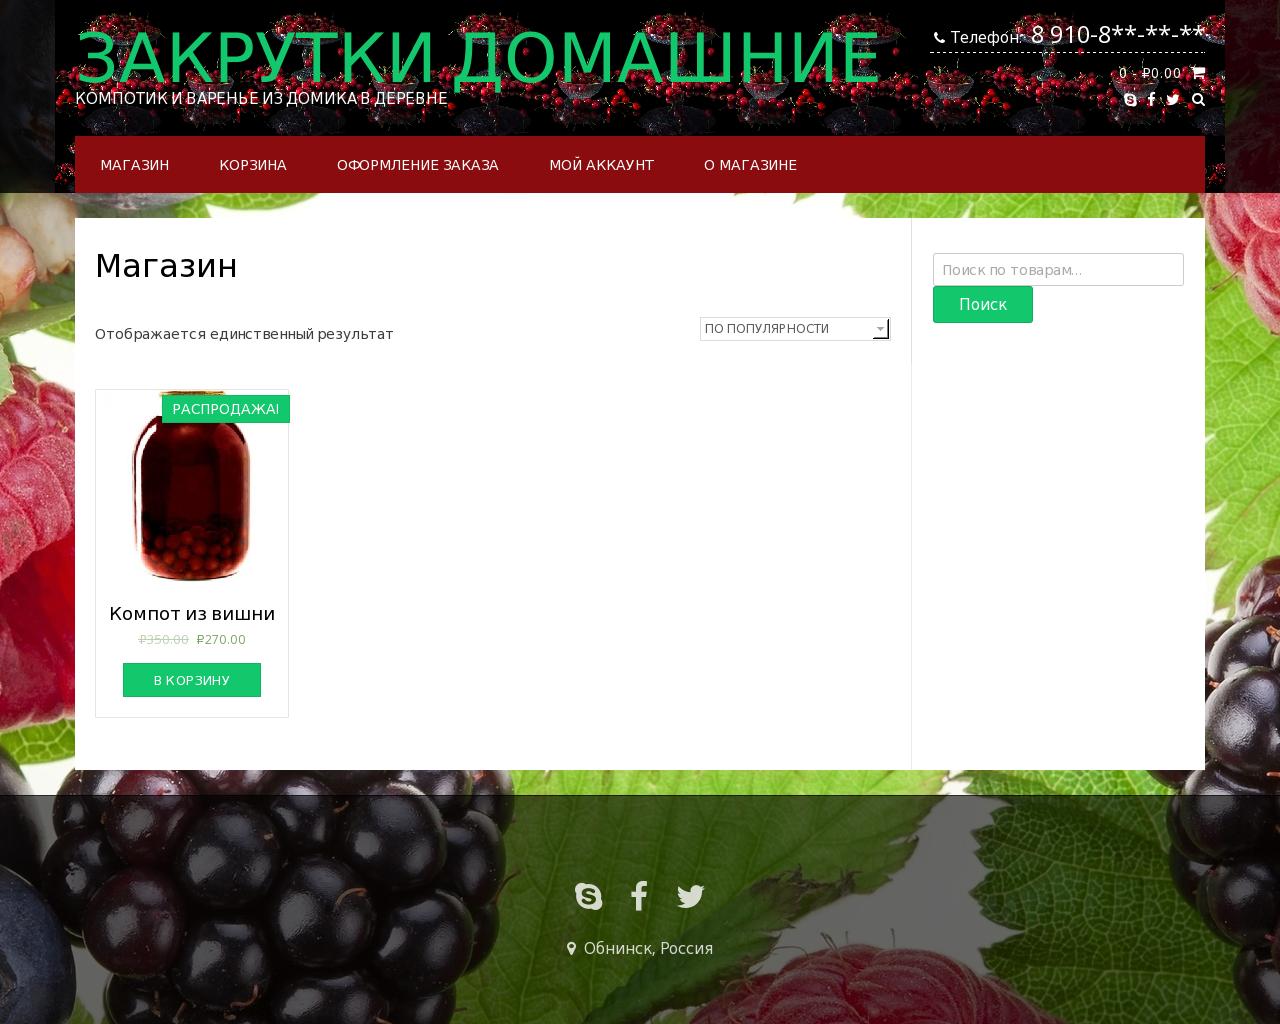 Изображение сайта dom-zakrutka.ru в разрешении 1280x1024